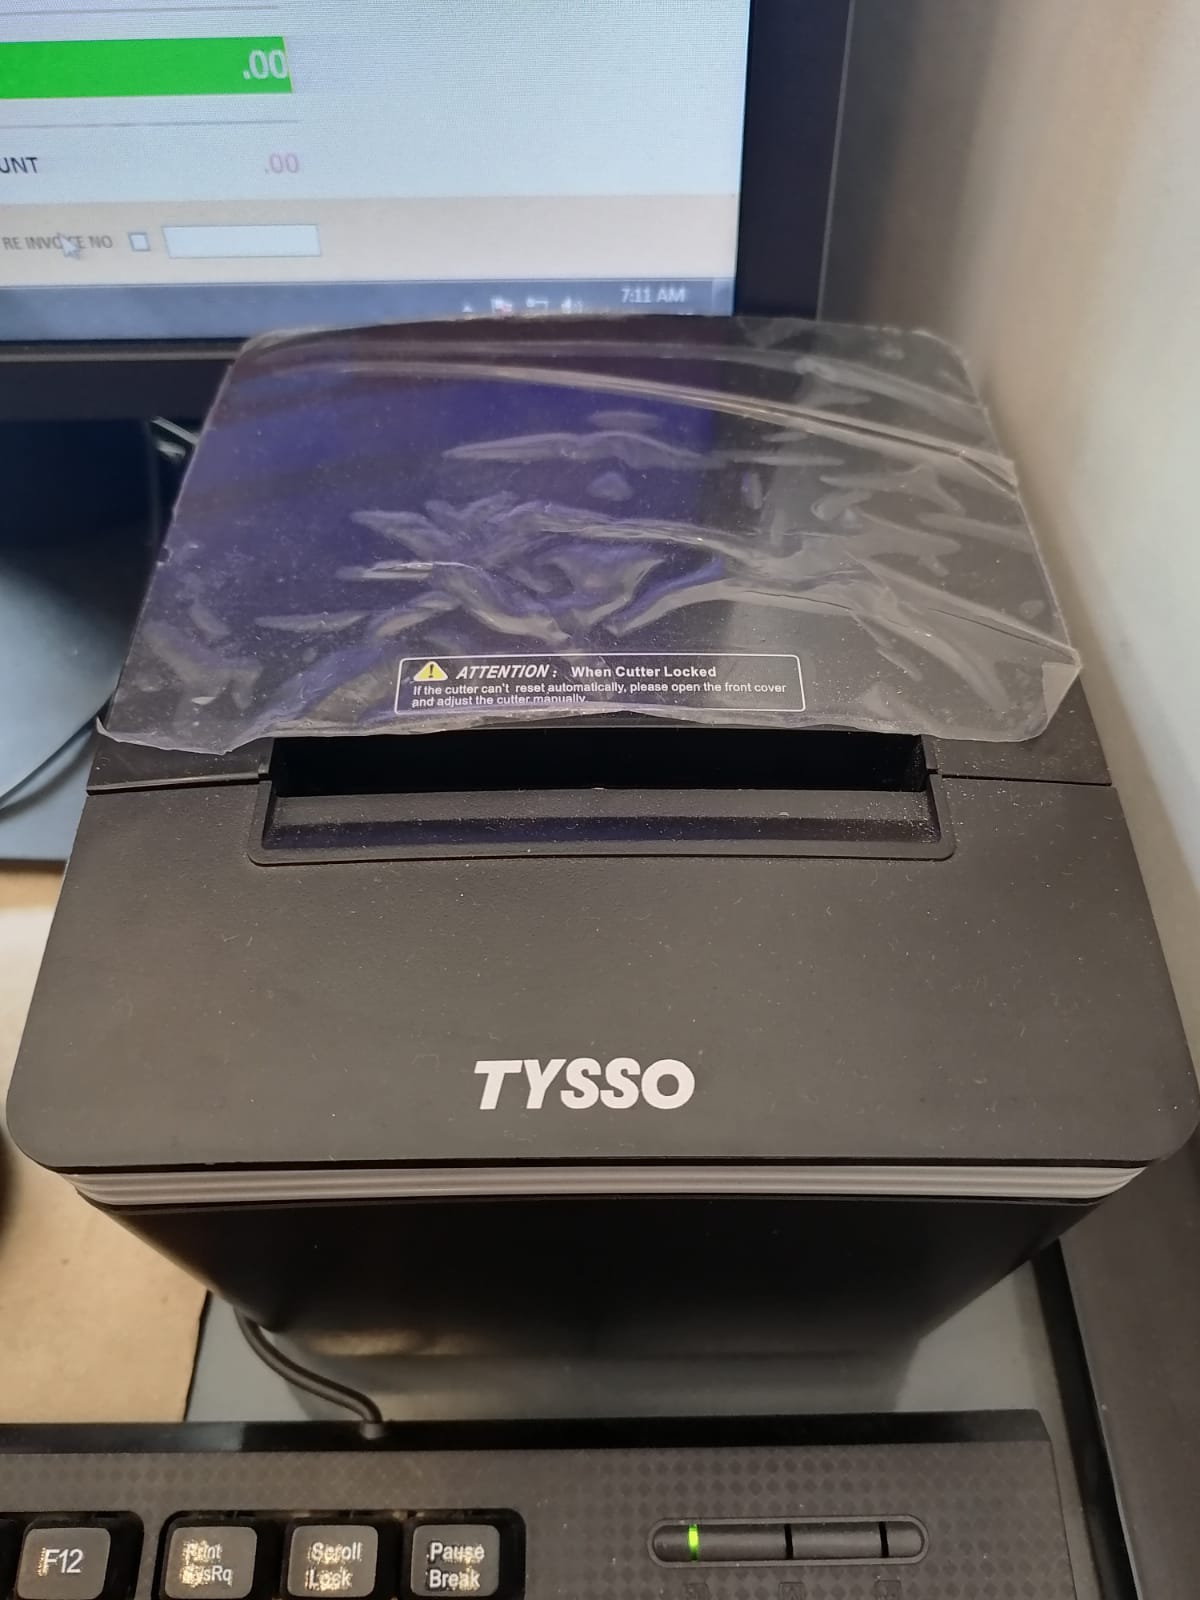 TYSSO Thermal Receipt Printer – Prp 300